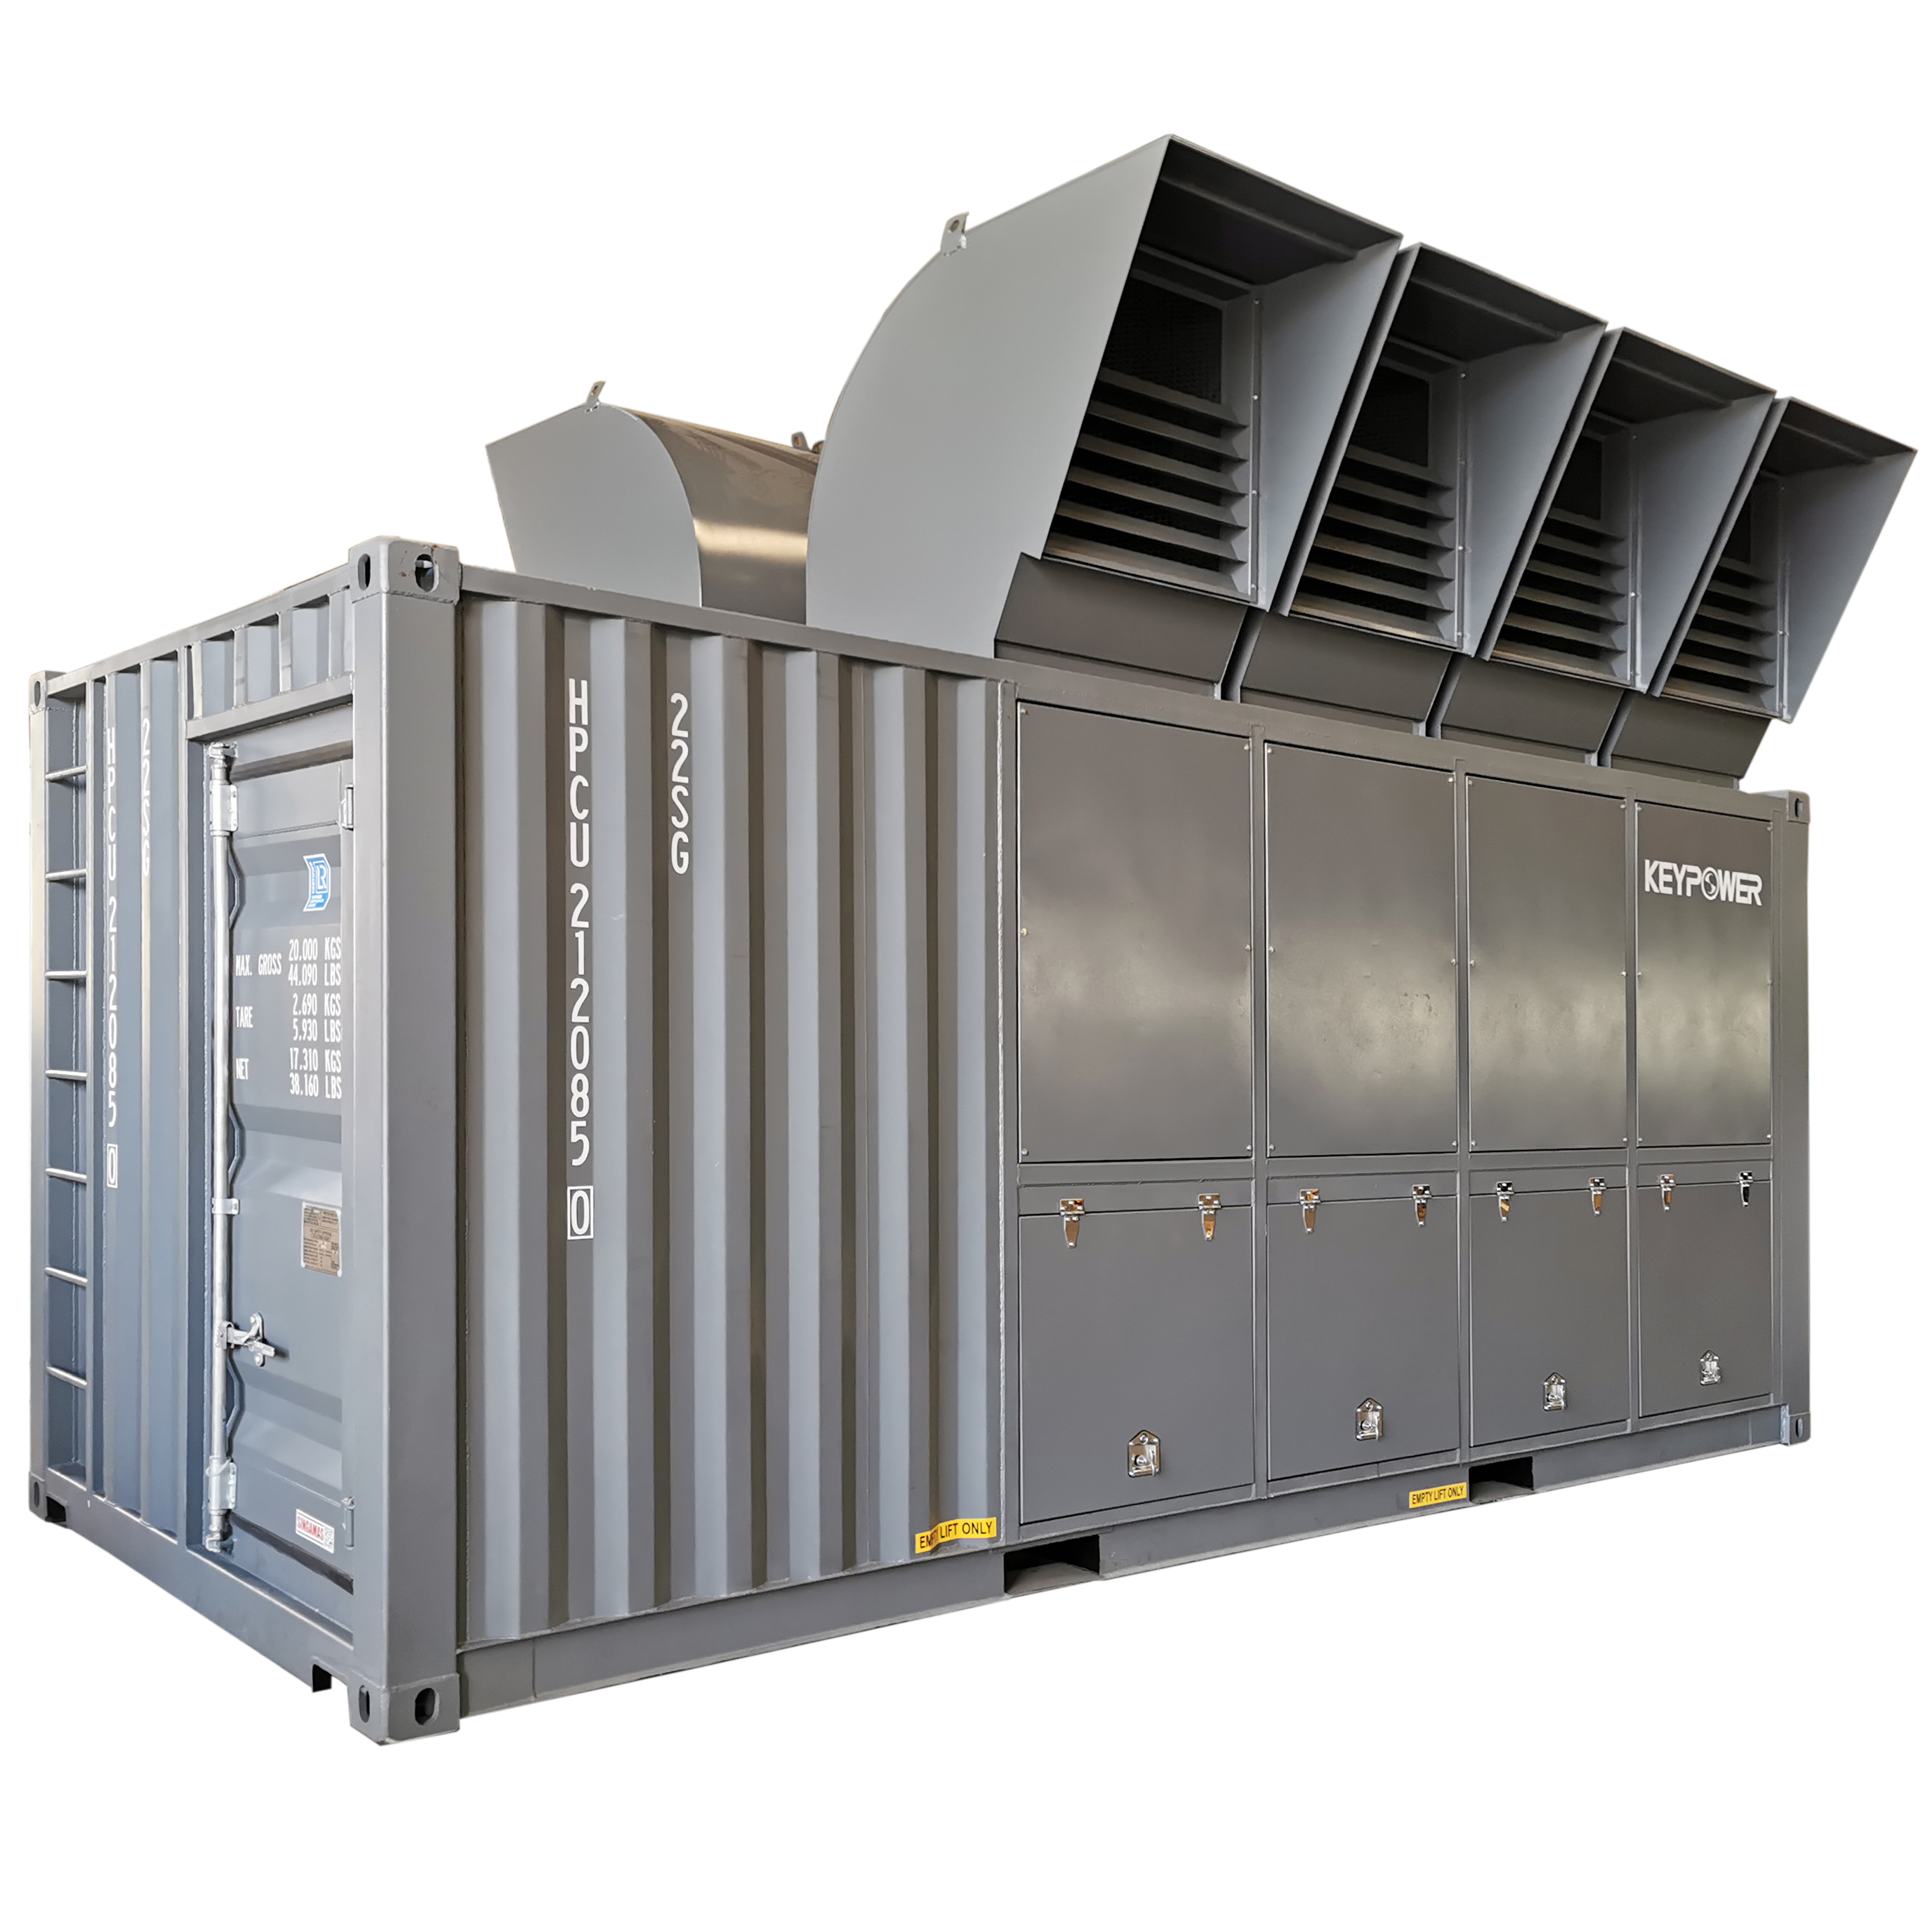 Reasonable price Load Banks For Generators - KEYPOWER 2400kW Resistive Load Bank For Generator Testing – Gff Keypower